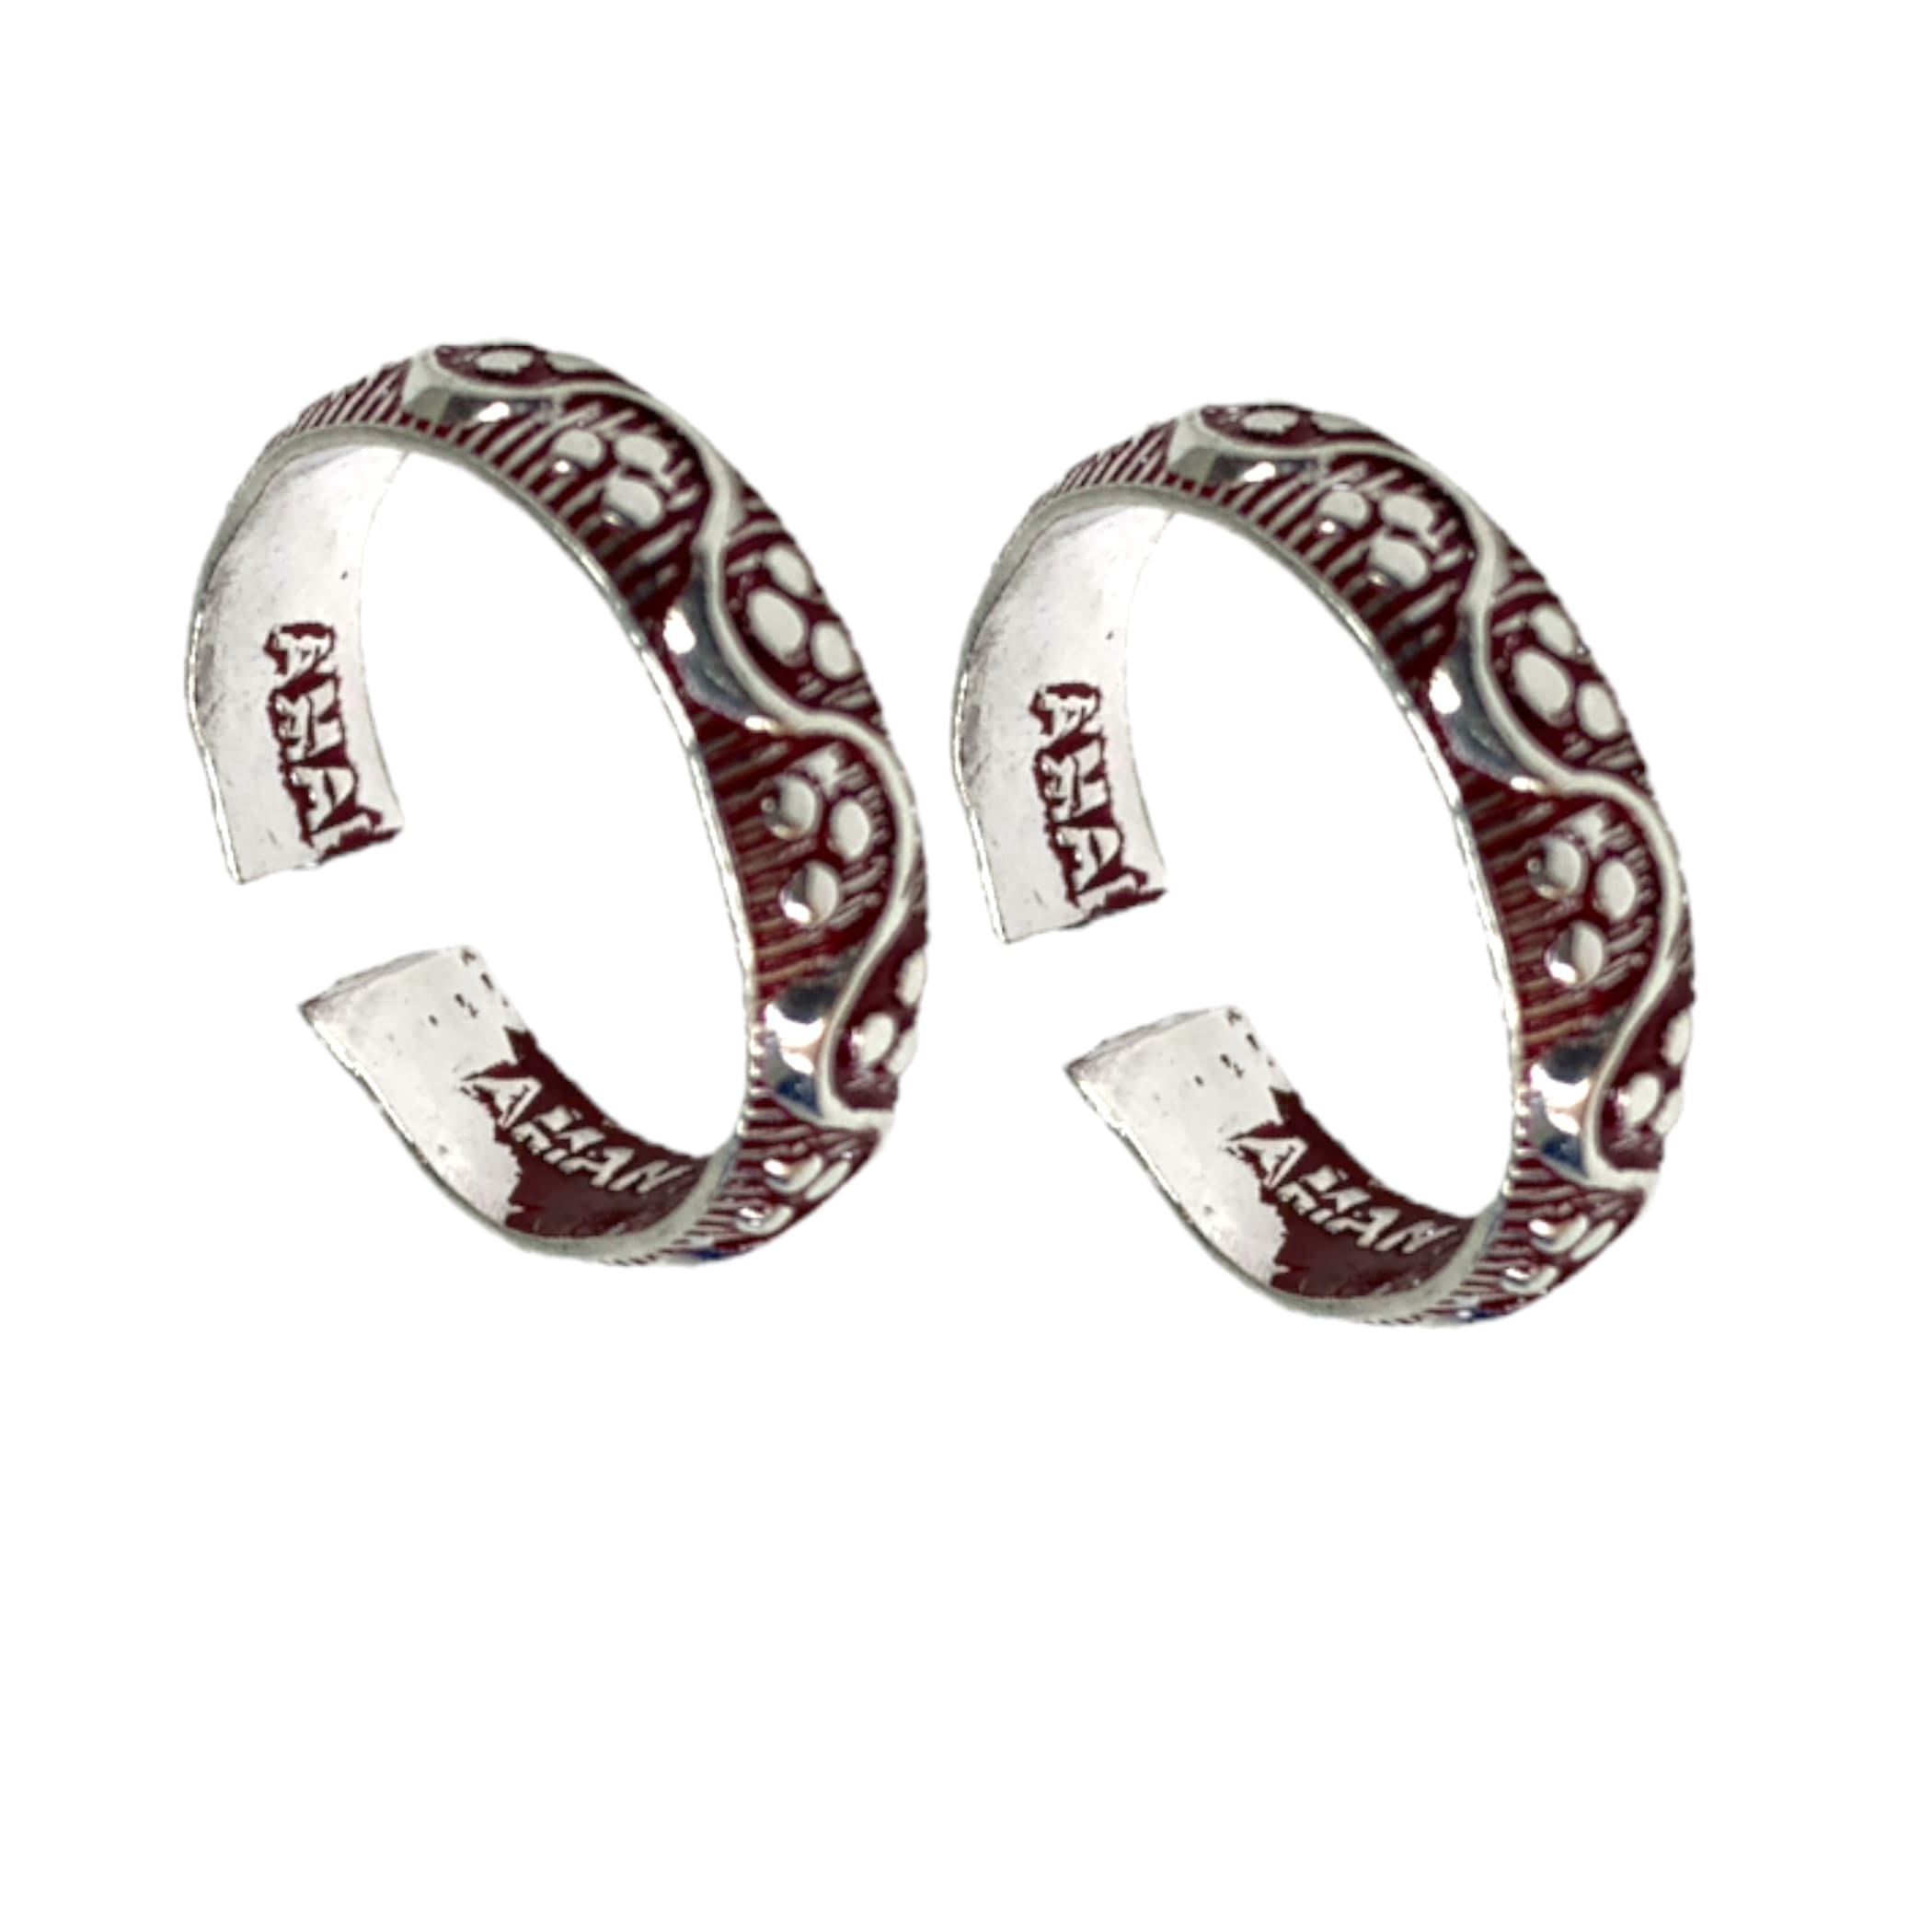 Toe rings pair for women adjustable bichua indian bichiya